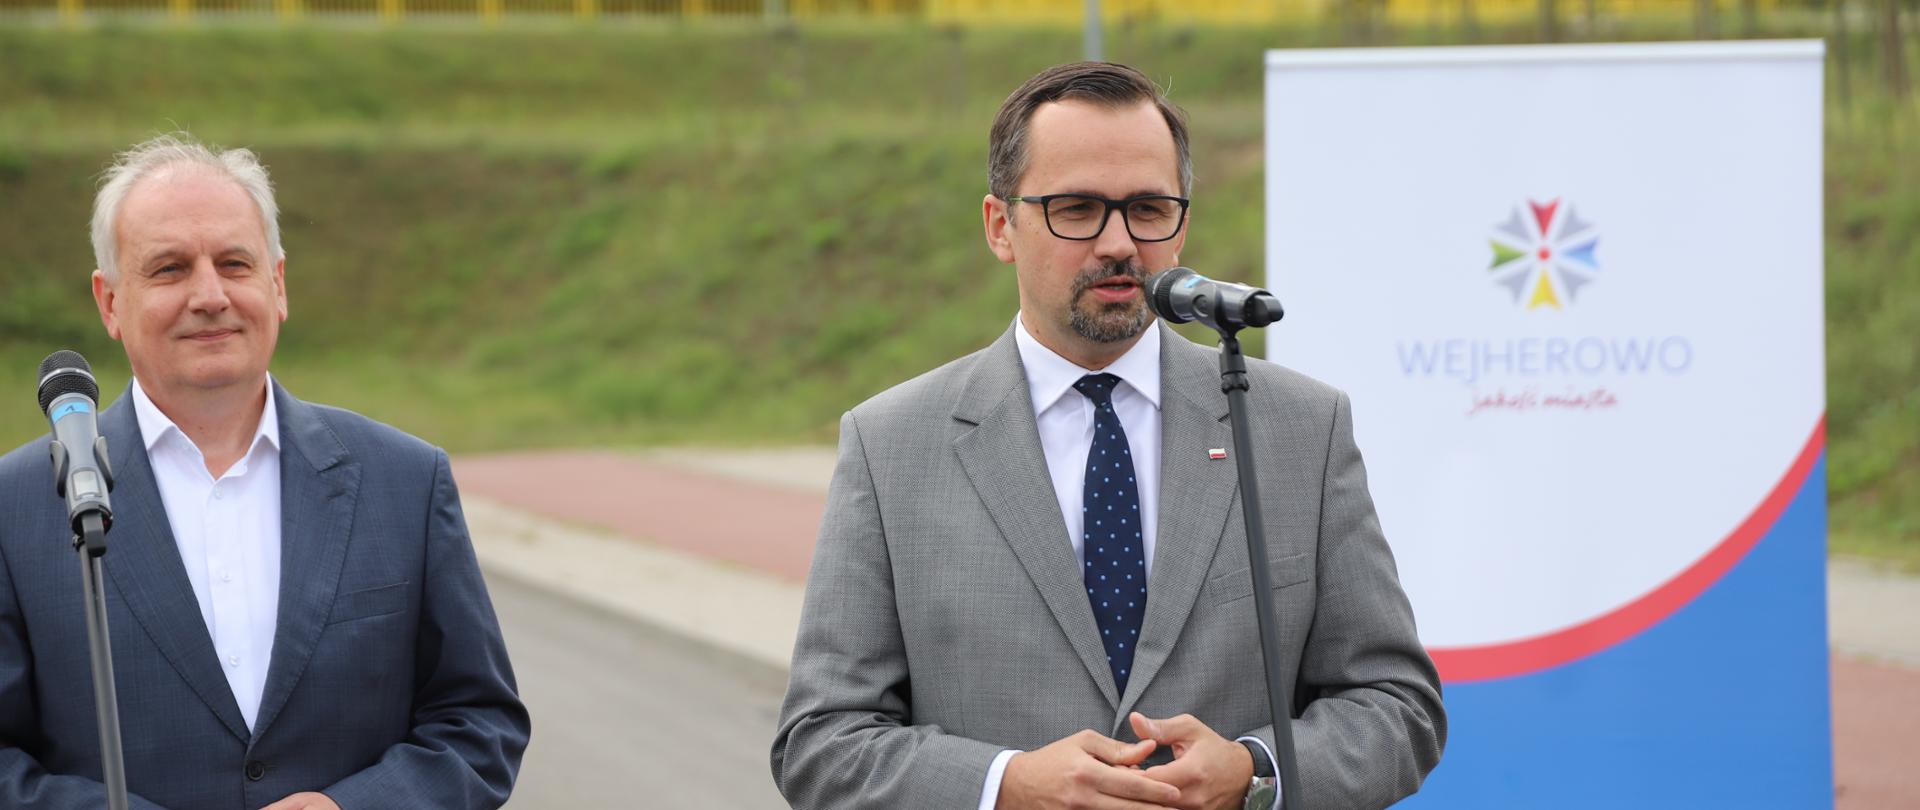 Wiceminister Marcin Horała stoi przed mikrofonem